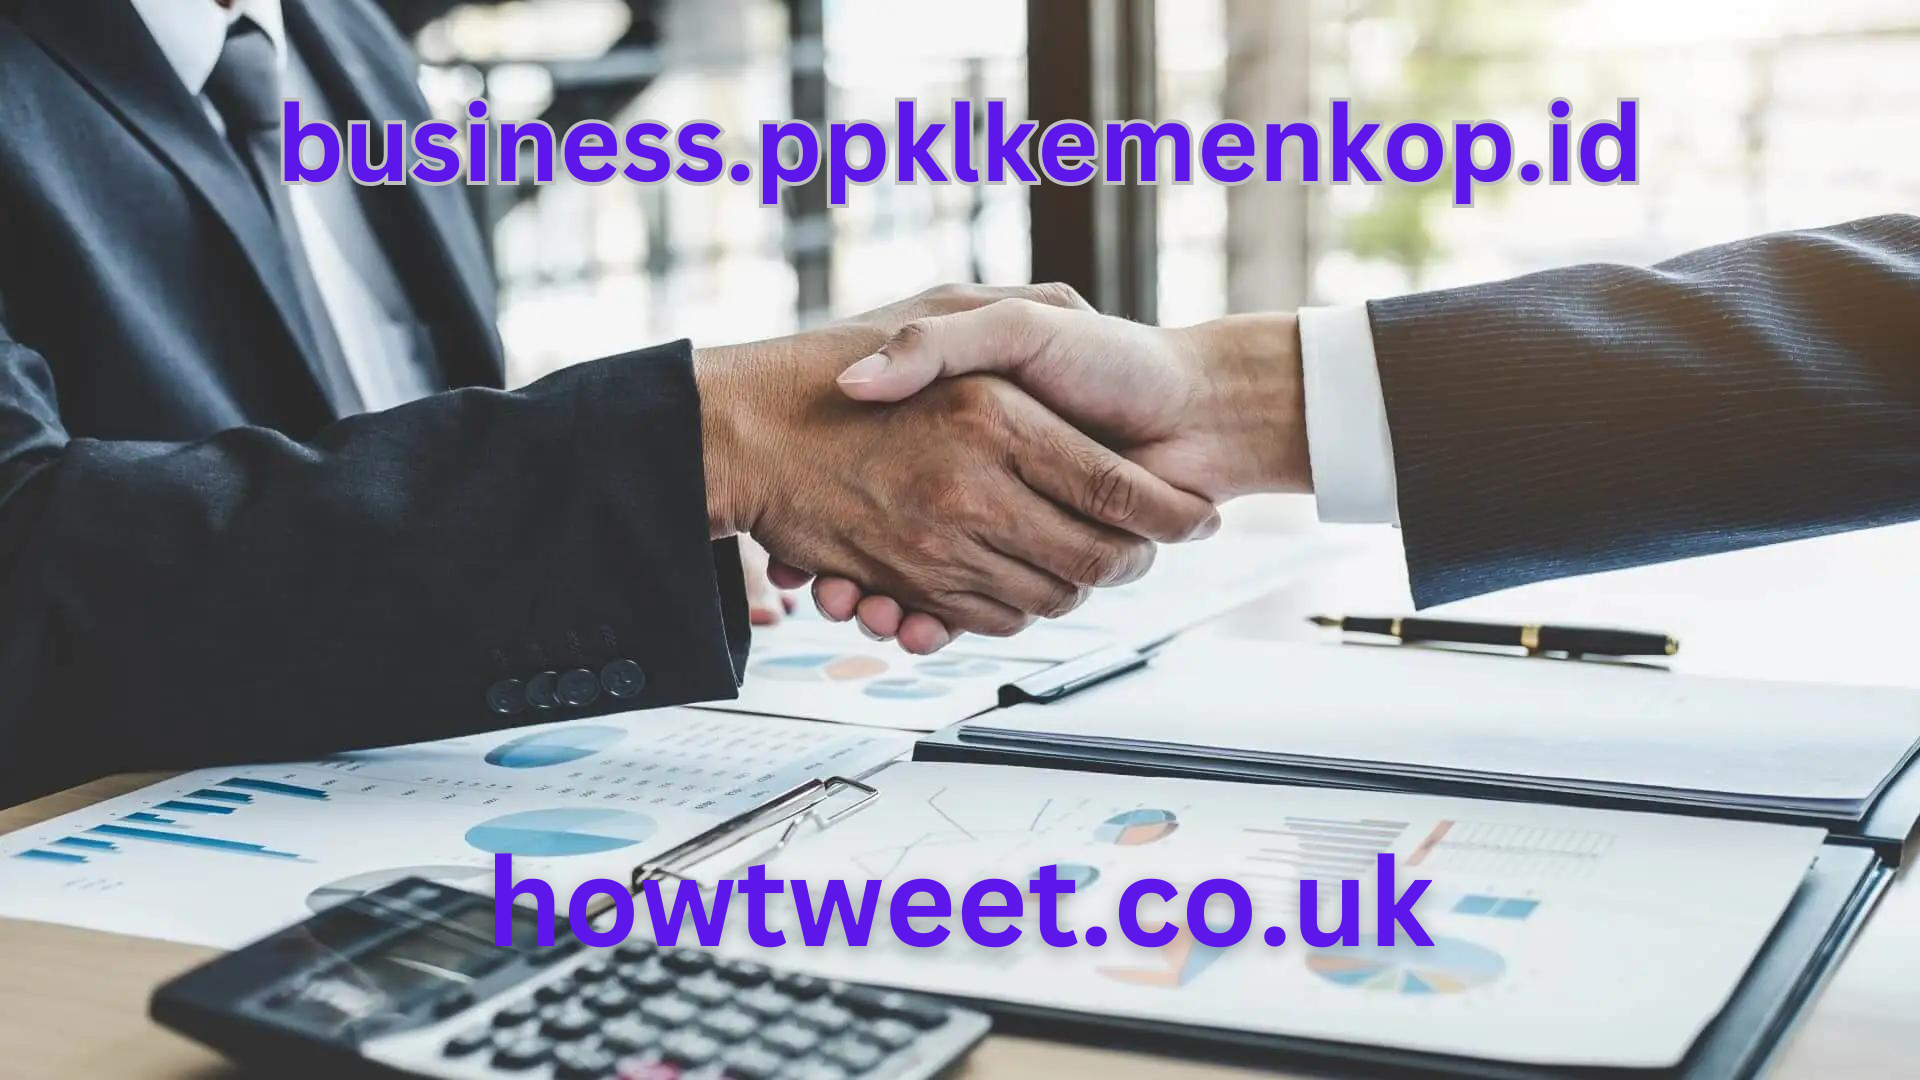 business.ppklkemenkop.id